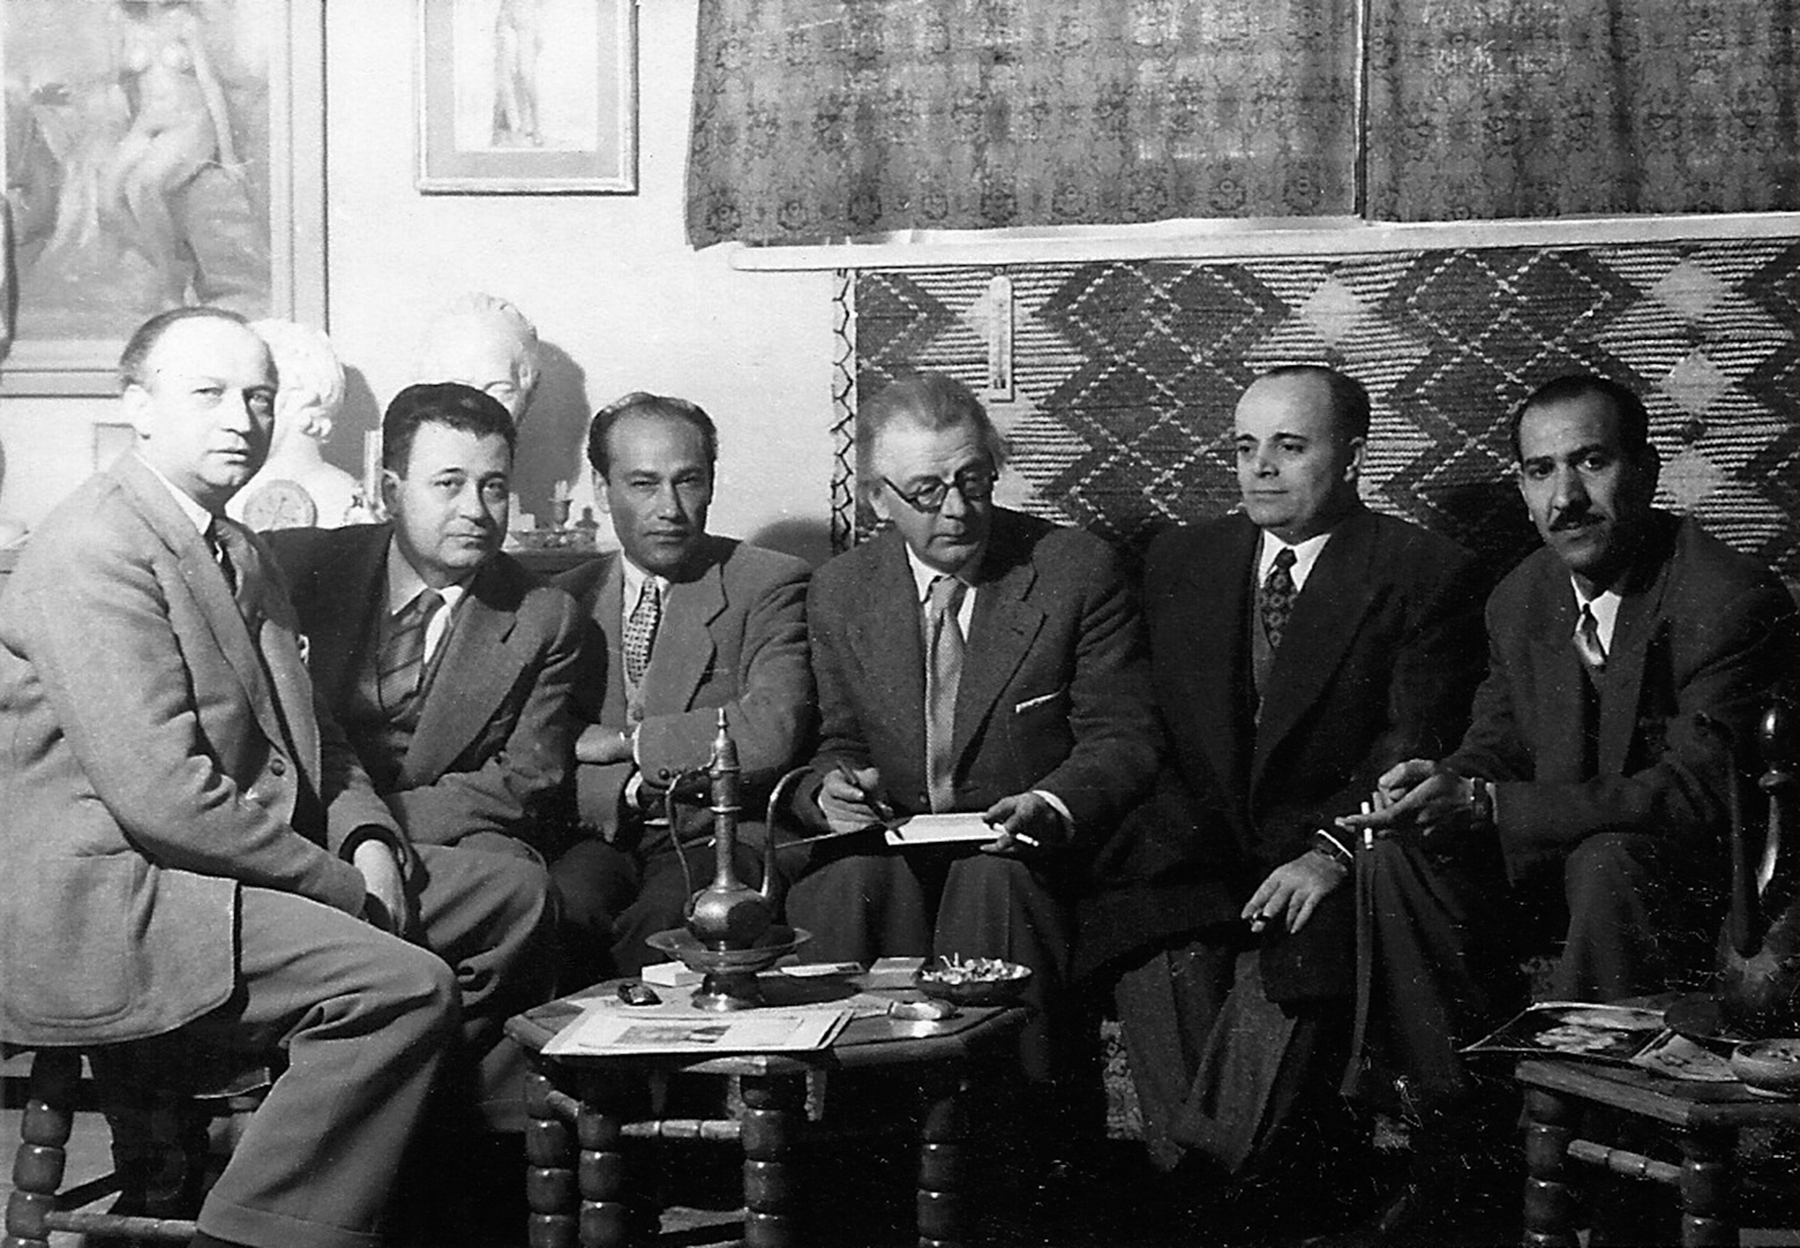 Guests at the studio of Nassir Shoura in 1949: (from right) Saad Sa&rsquo;eb (writer, translator and poet), Jack Wardeh, Nassir Shoura,&nbsp;(fourth), Abdulaziz Nashawati.